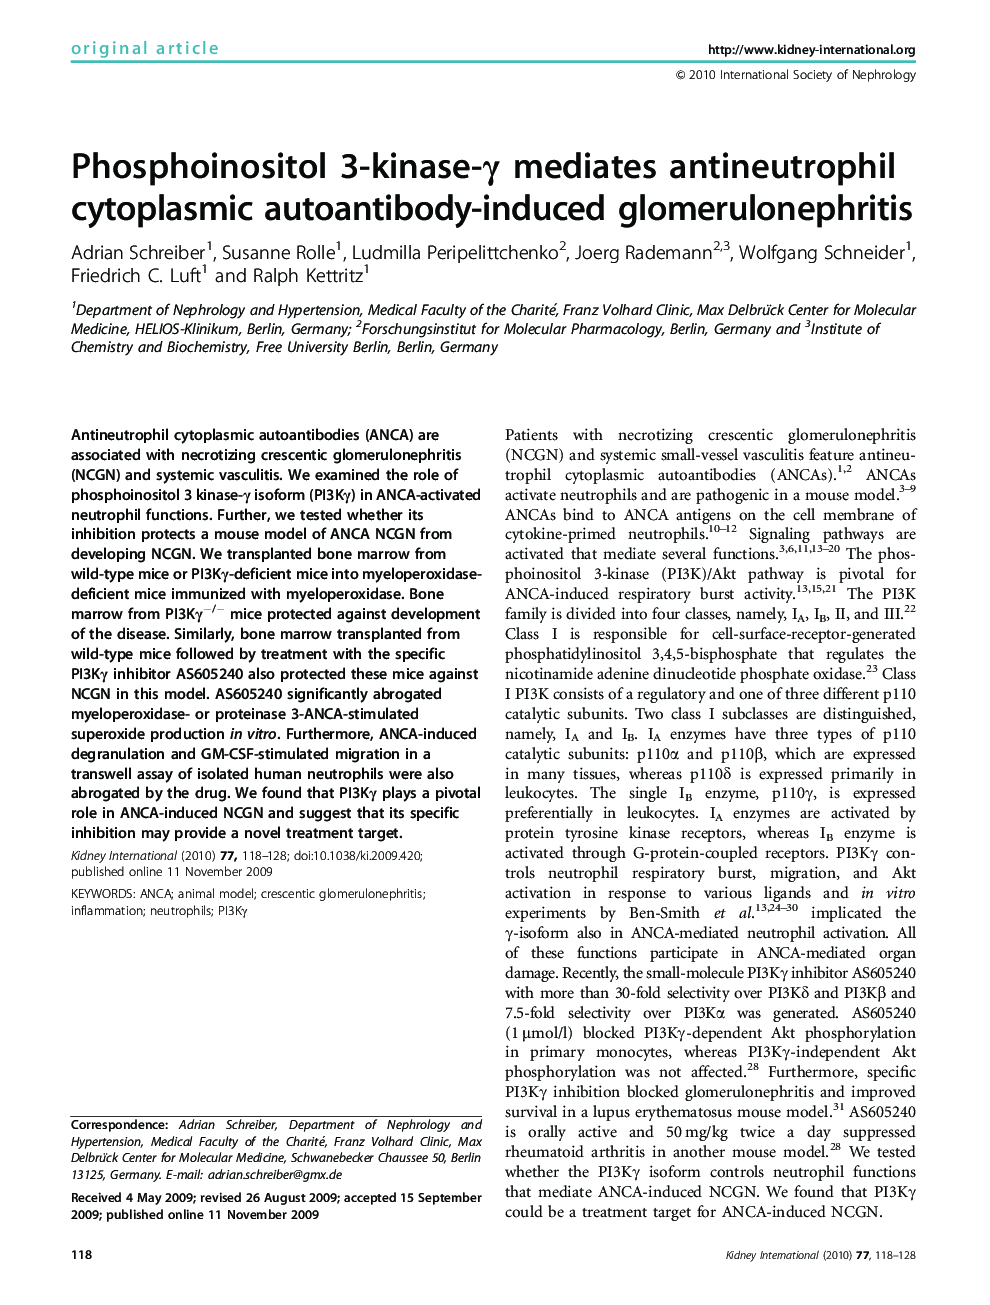 Phosphoinositol 3-kinase-γ mediates antineutrophil cytoplasmic autoantibody-induced glomerulonephritis 